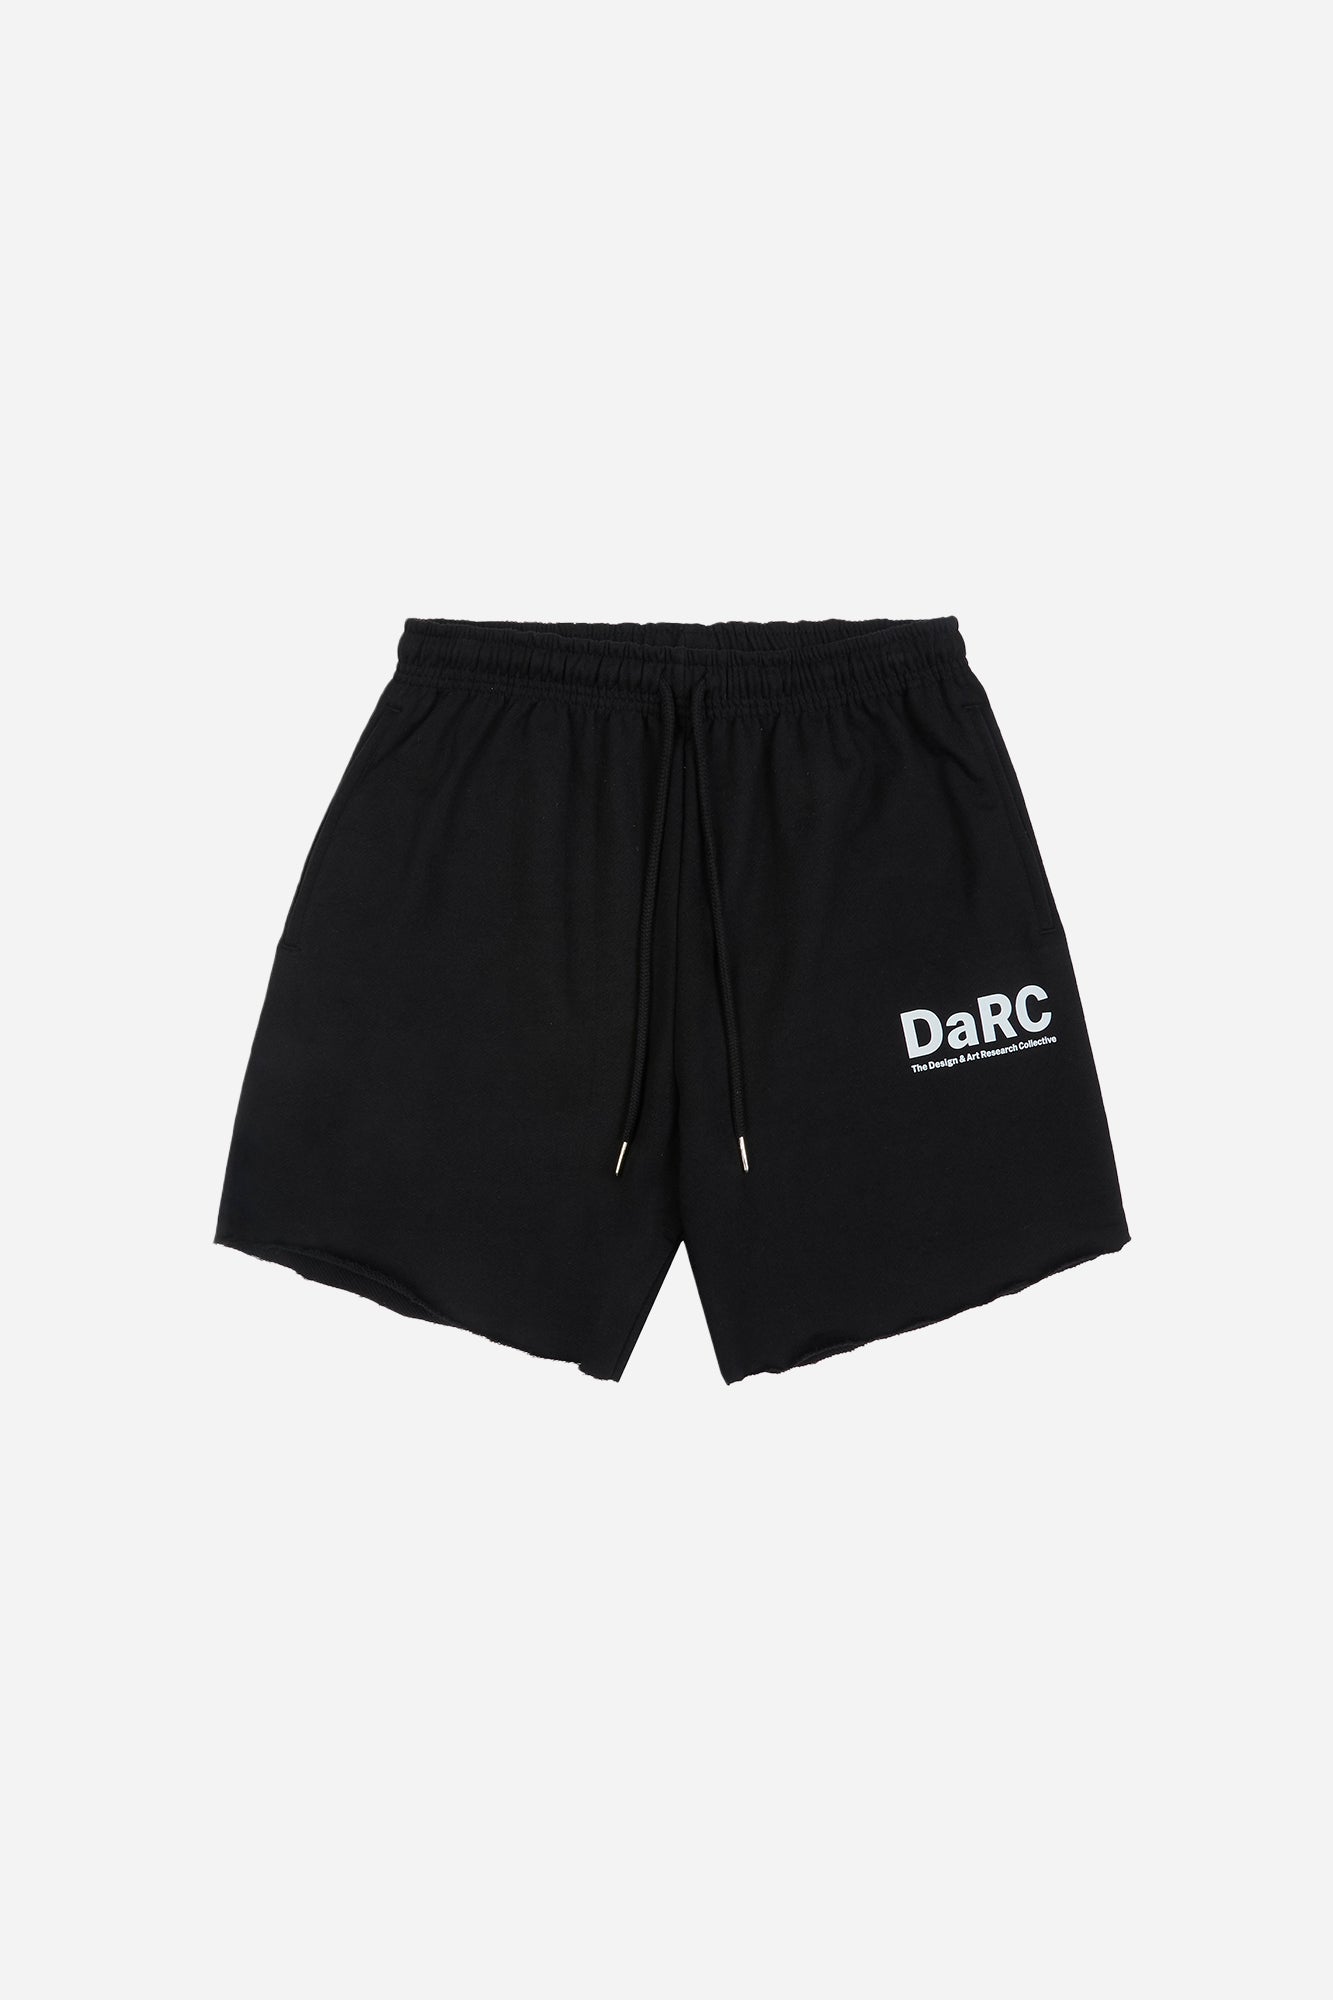 DaRC Shorts - Black